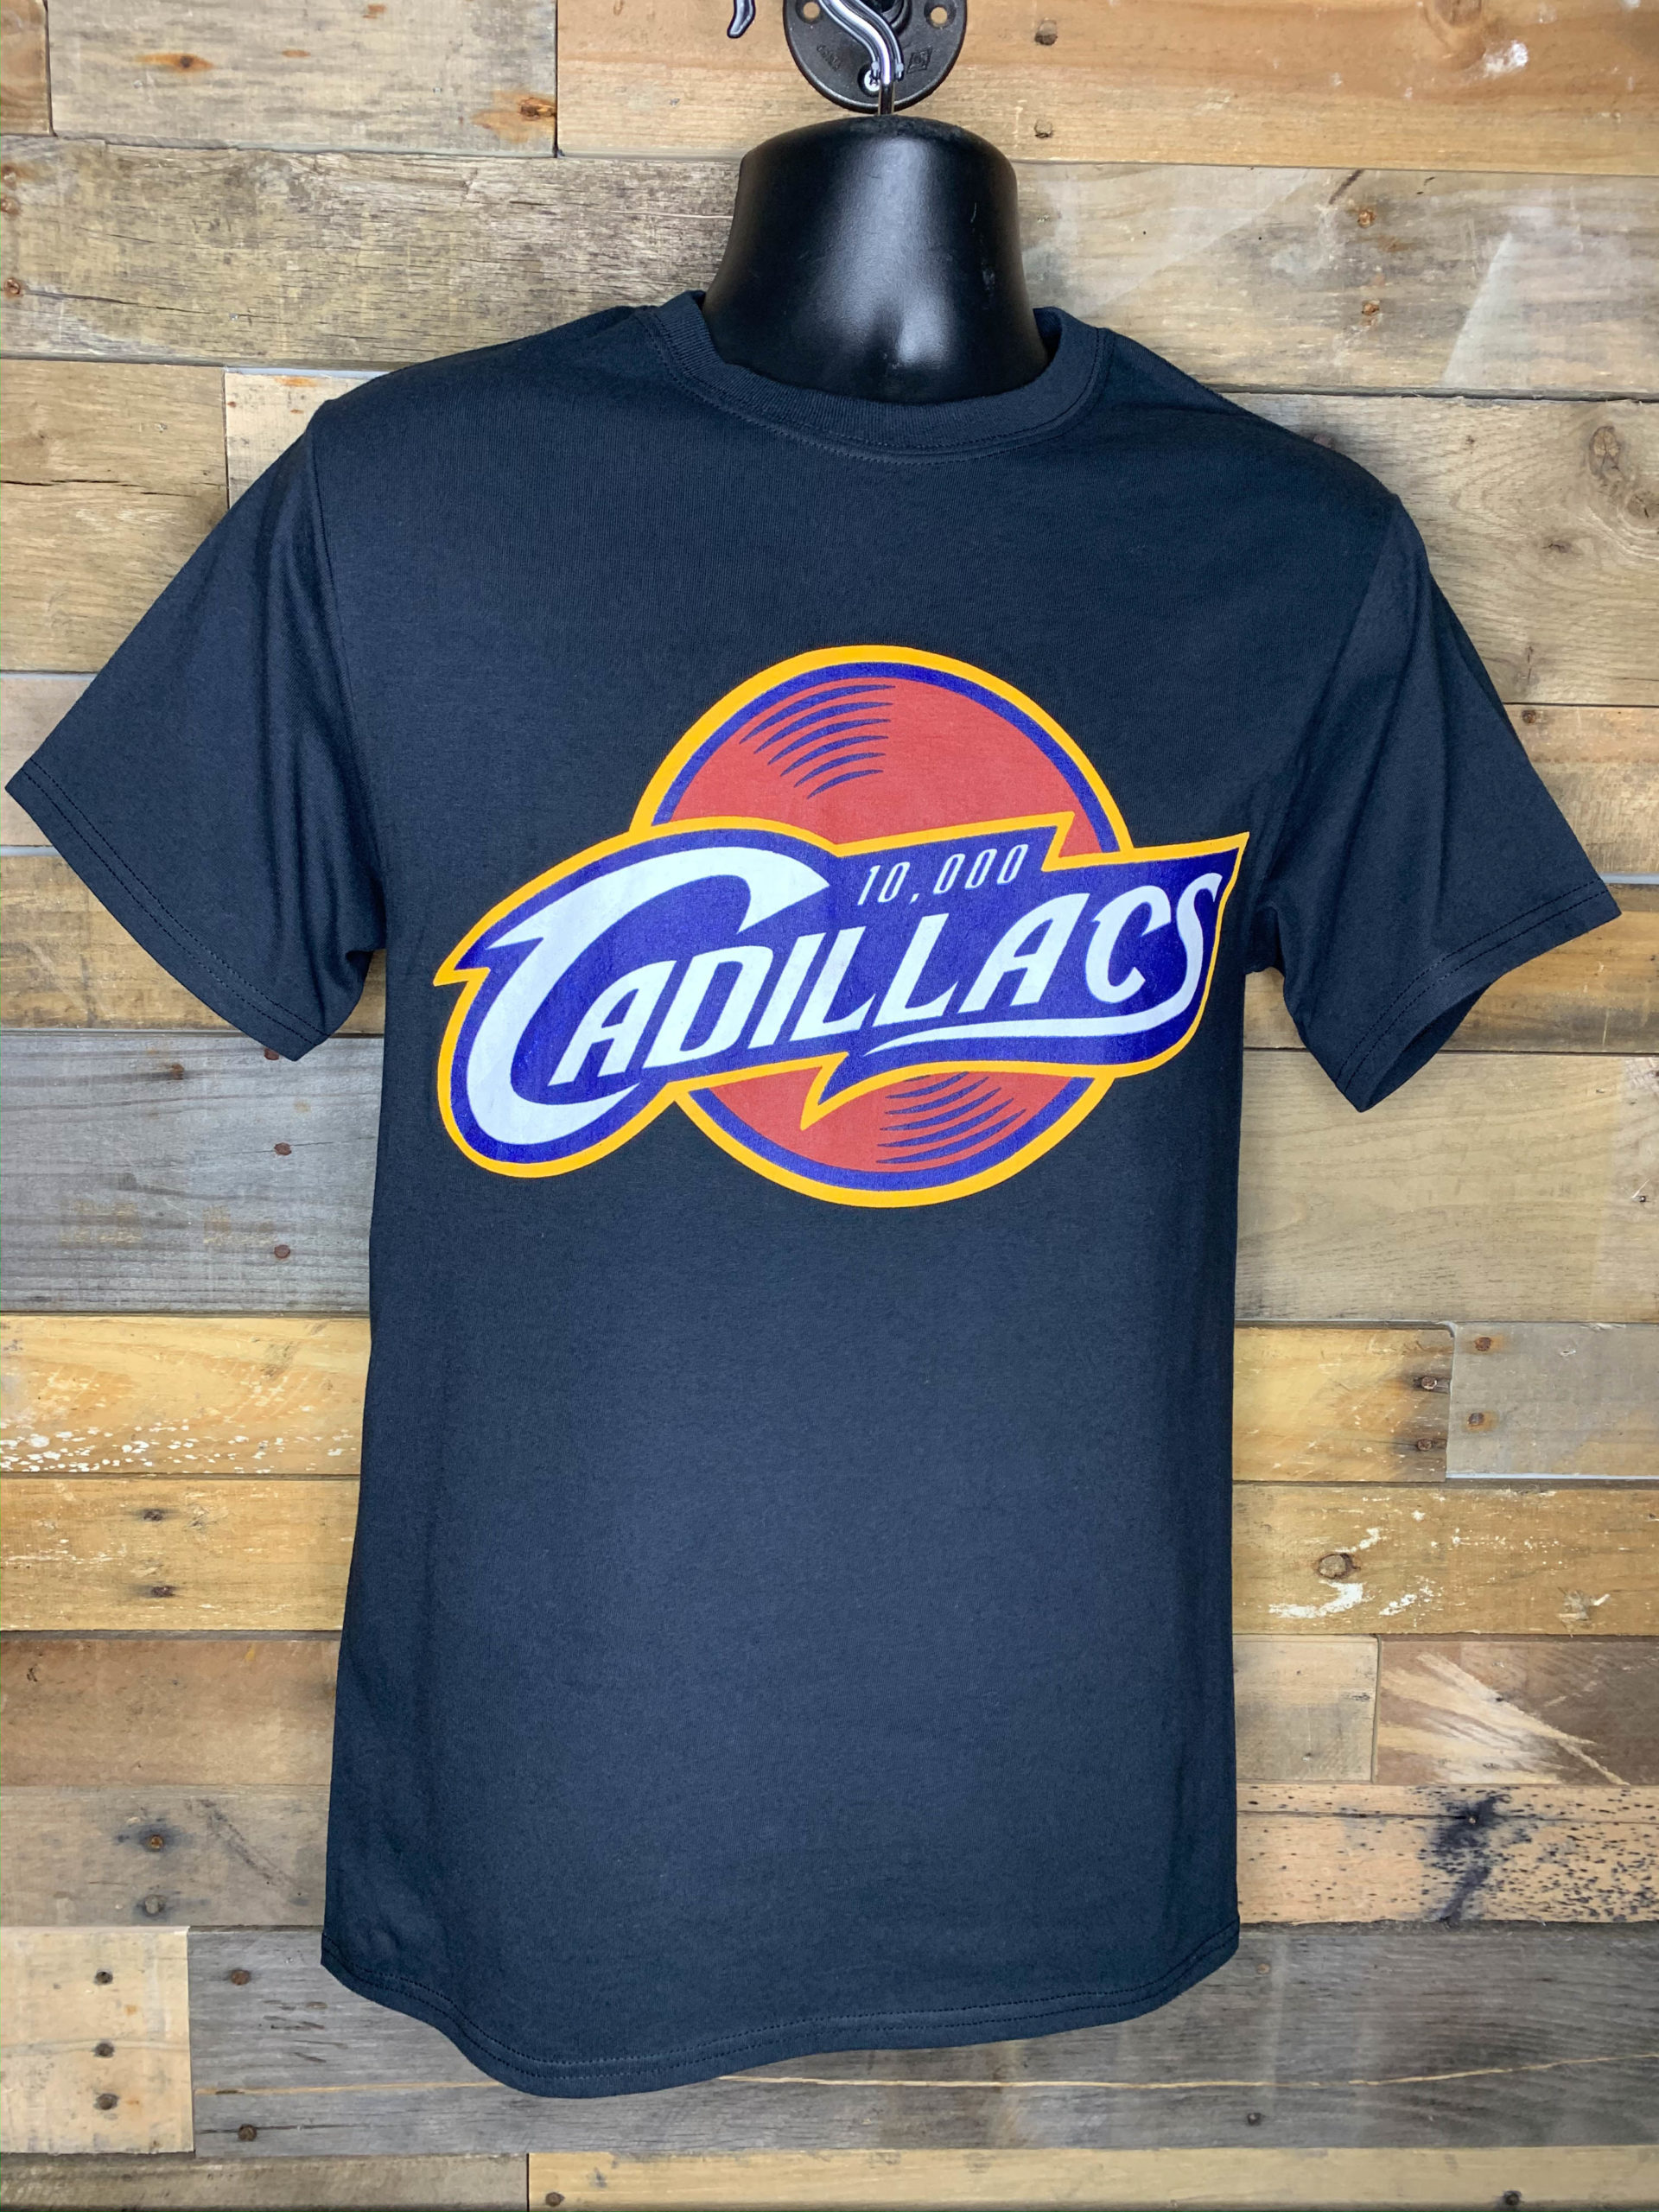 10,000 Cadillacs basketball logo T-shirt- black | Mushroomhead Official ...